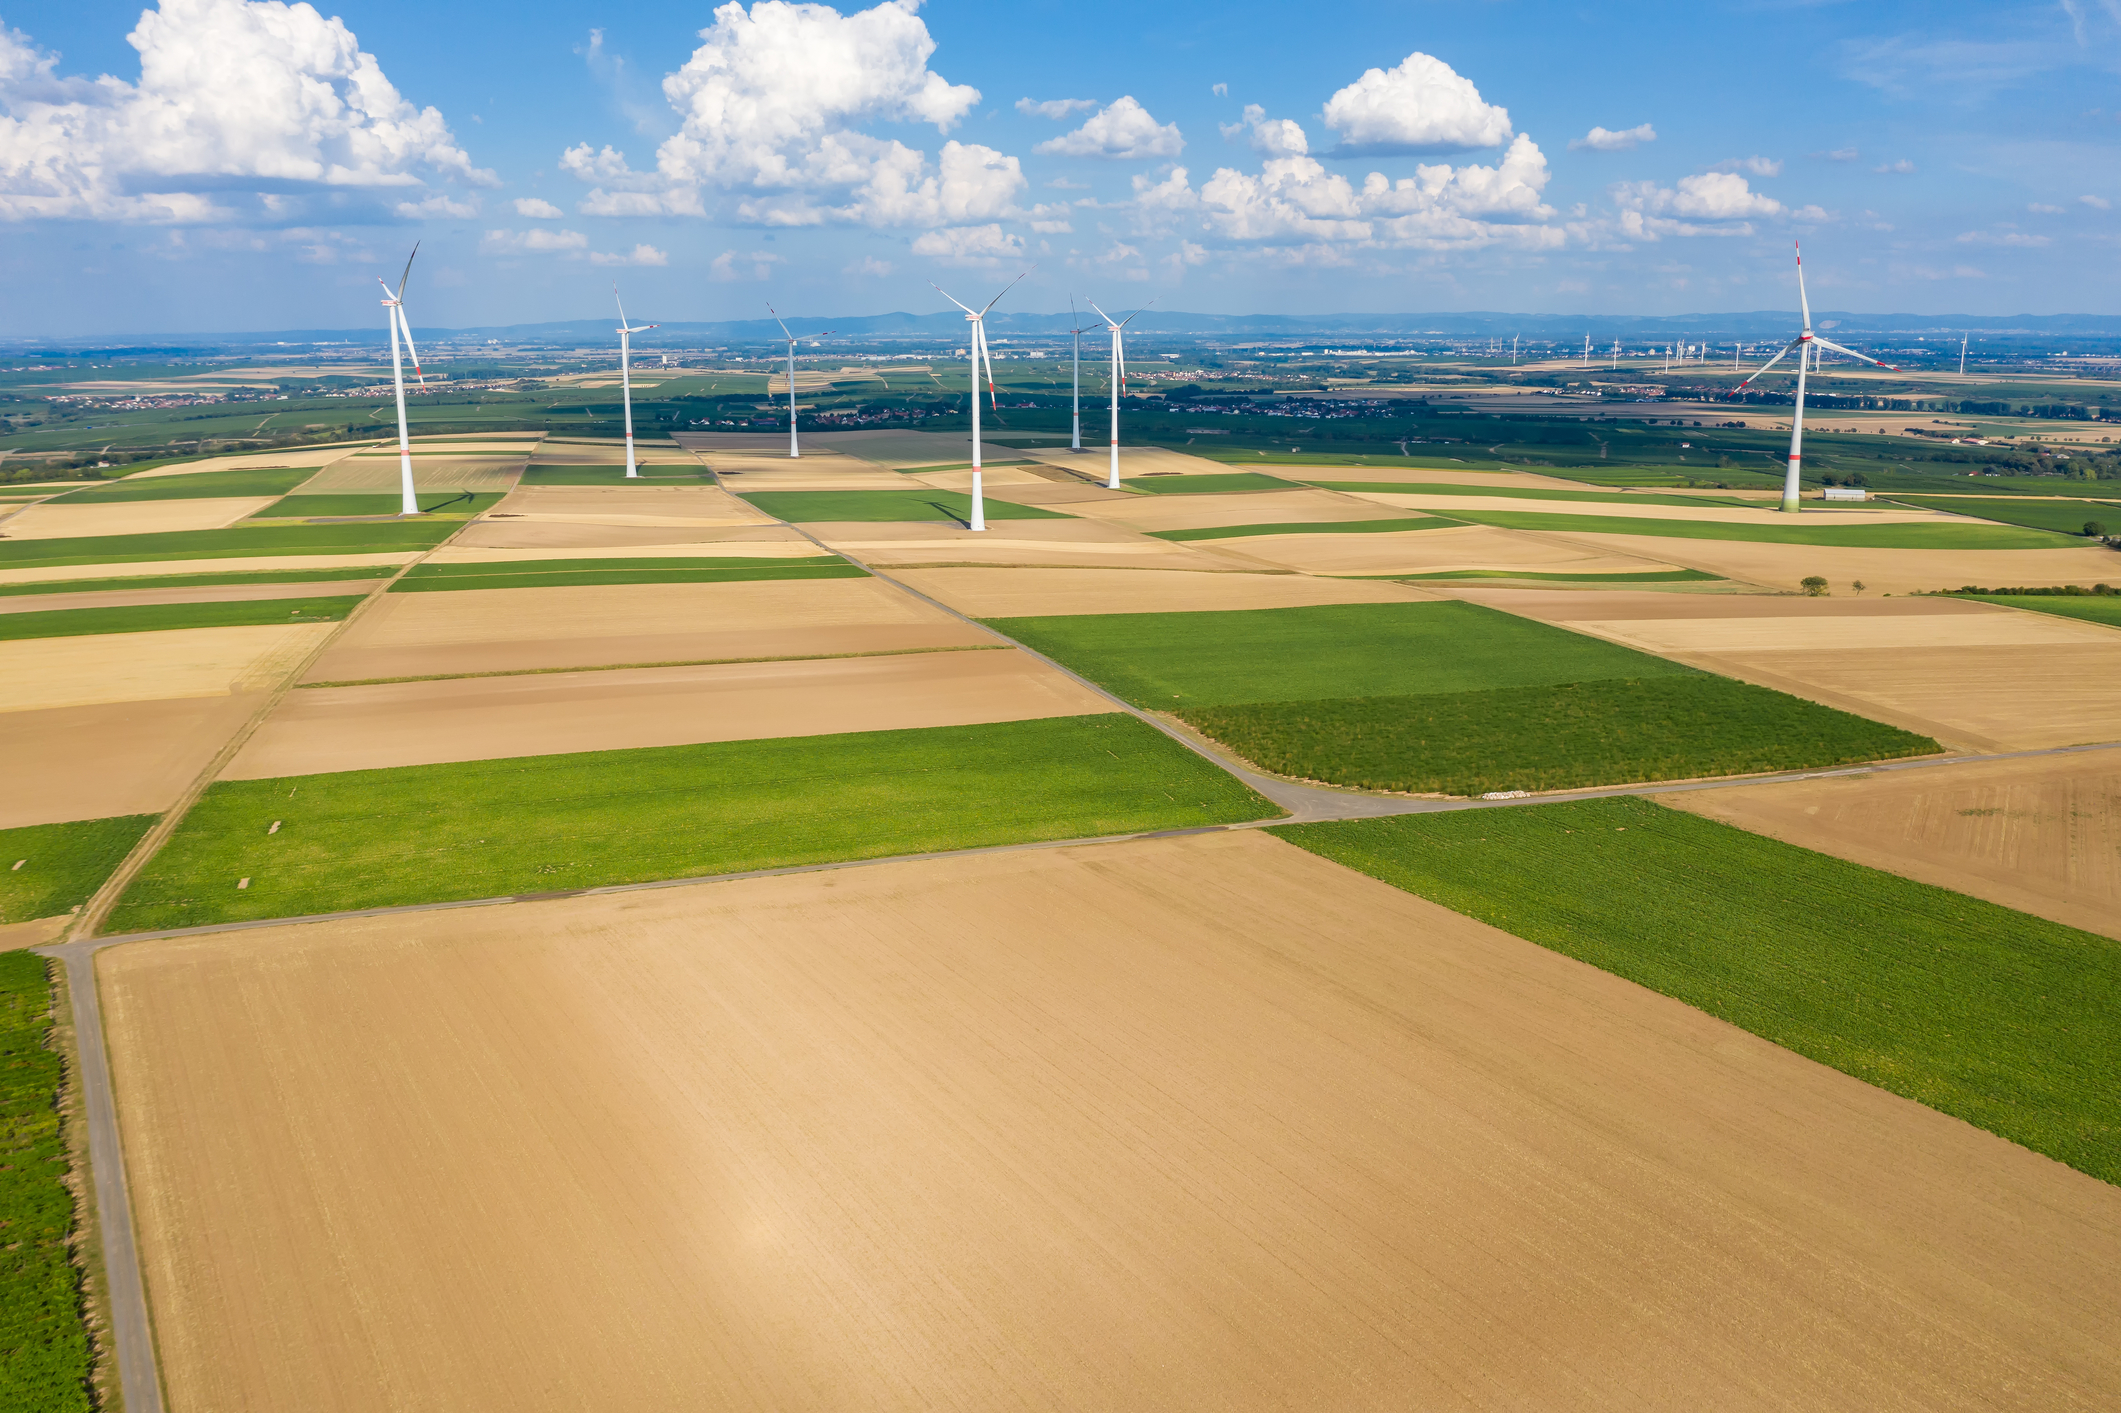 A wind farm in Rheinhessen, Germany. Photo: Harald Lueder/Dreamstime